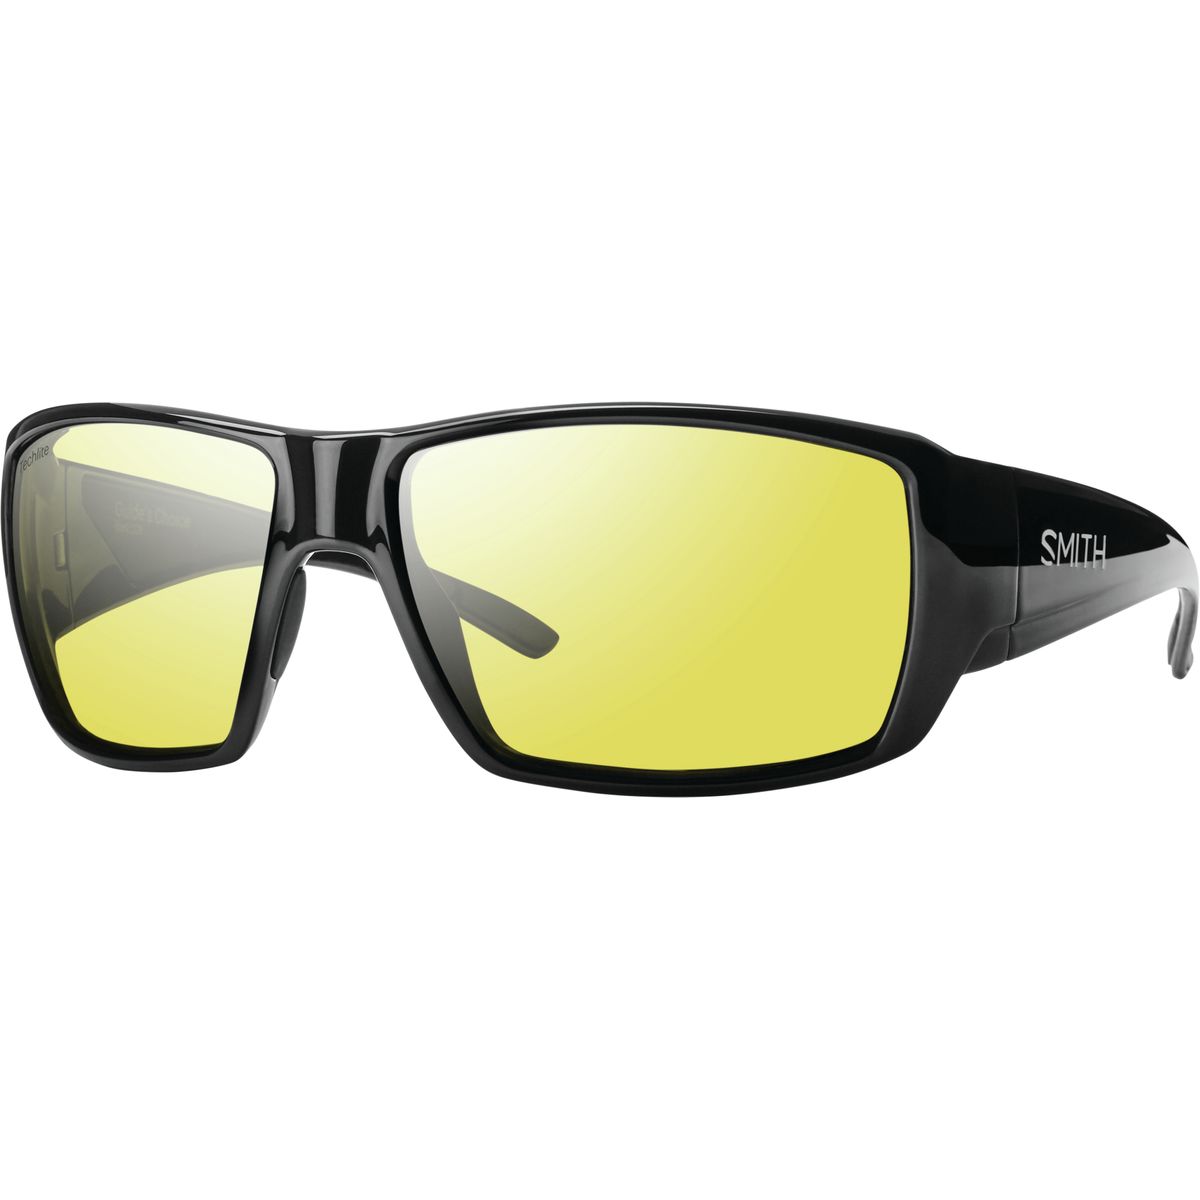 Smith Guides Choice Sunglasses Polarized Men's